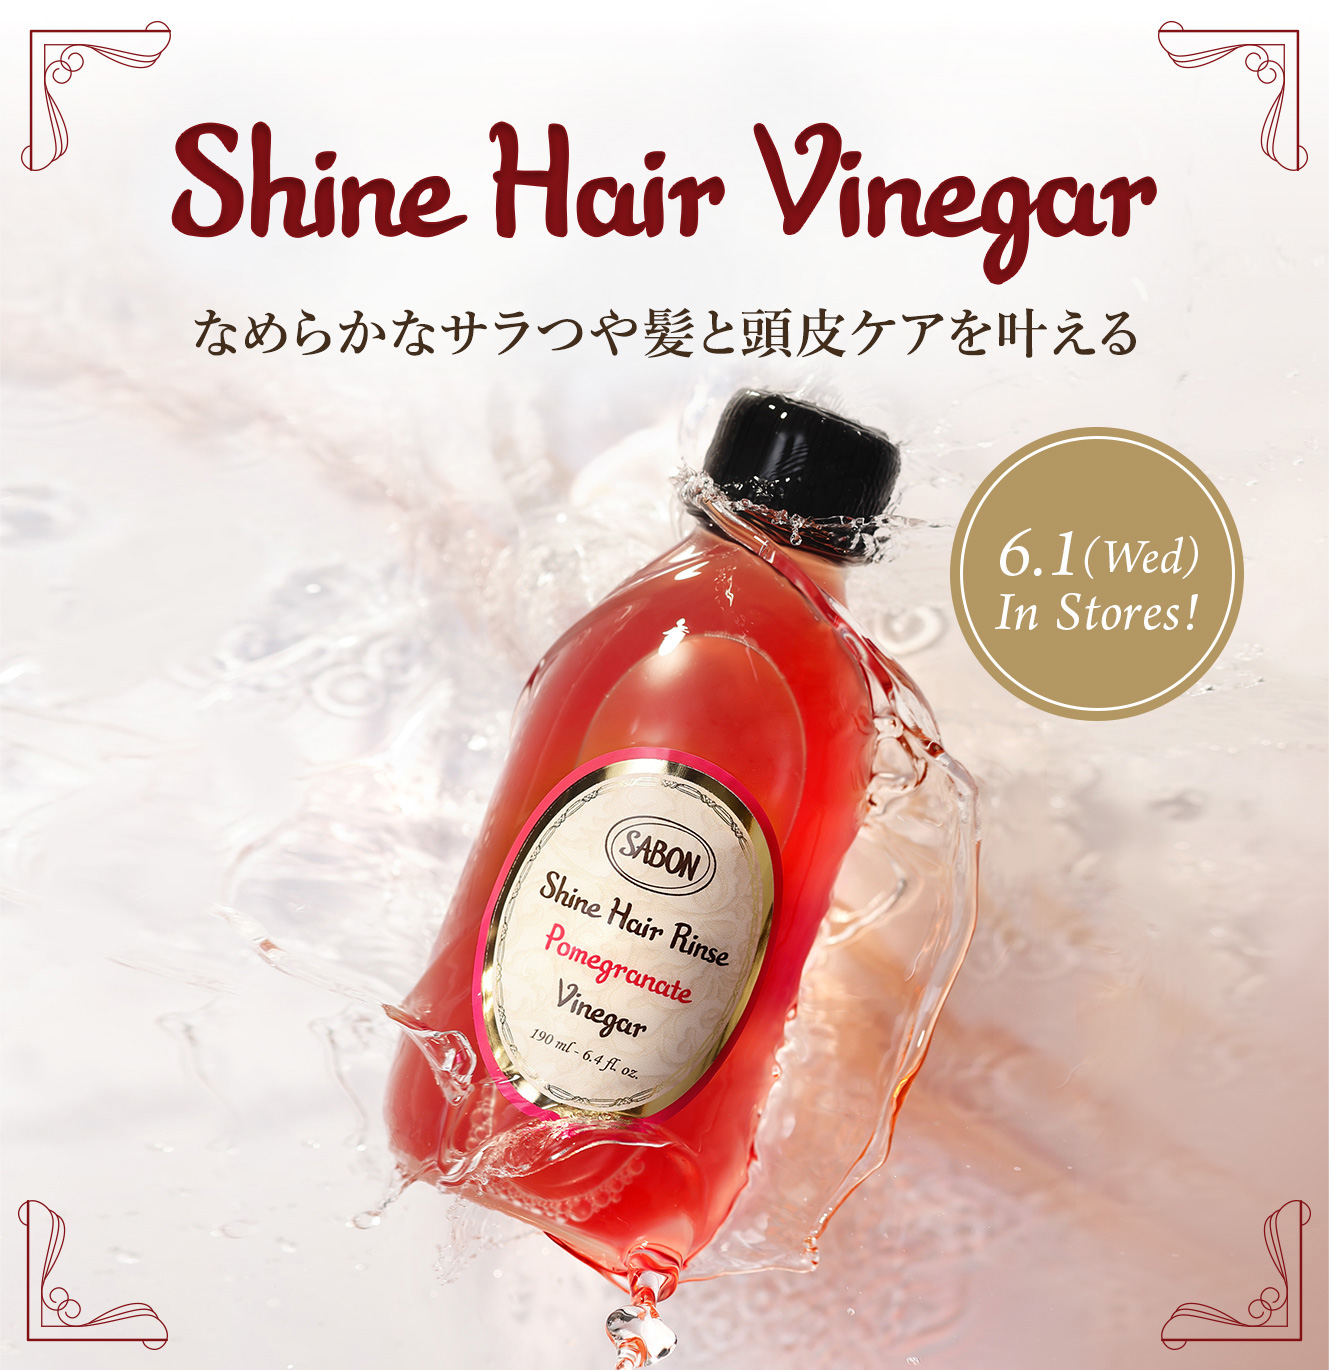 Shine Hair Vinegar なめらかなサラつや髪と頭皮ケアを叶える 6.1(Wed) In Stores!